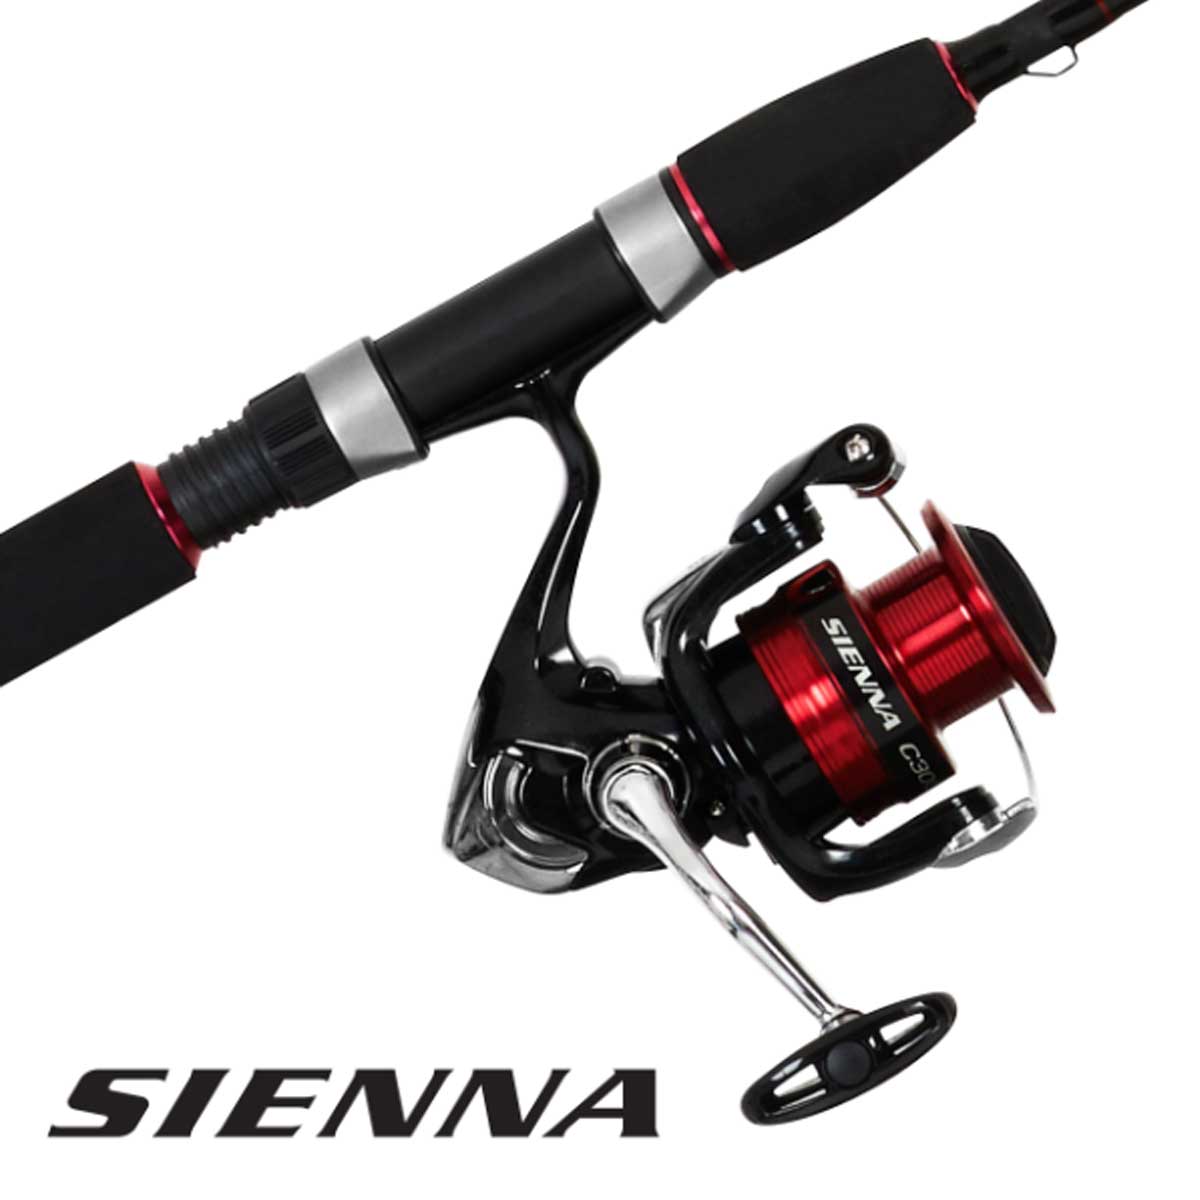 Shimano SIENNA Estuary Spin combo 2500 reel-7′ 2 piece 2-4 kg rod